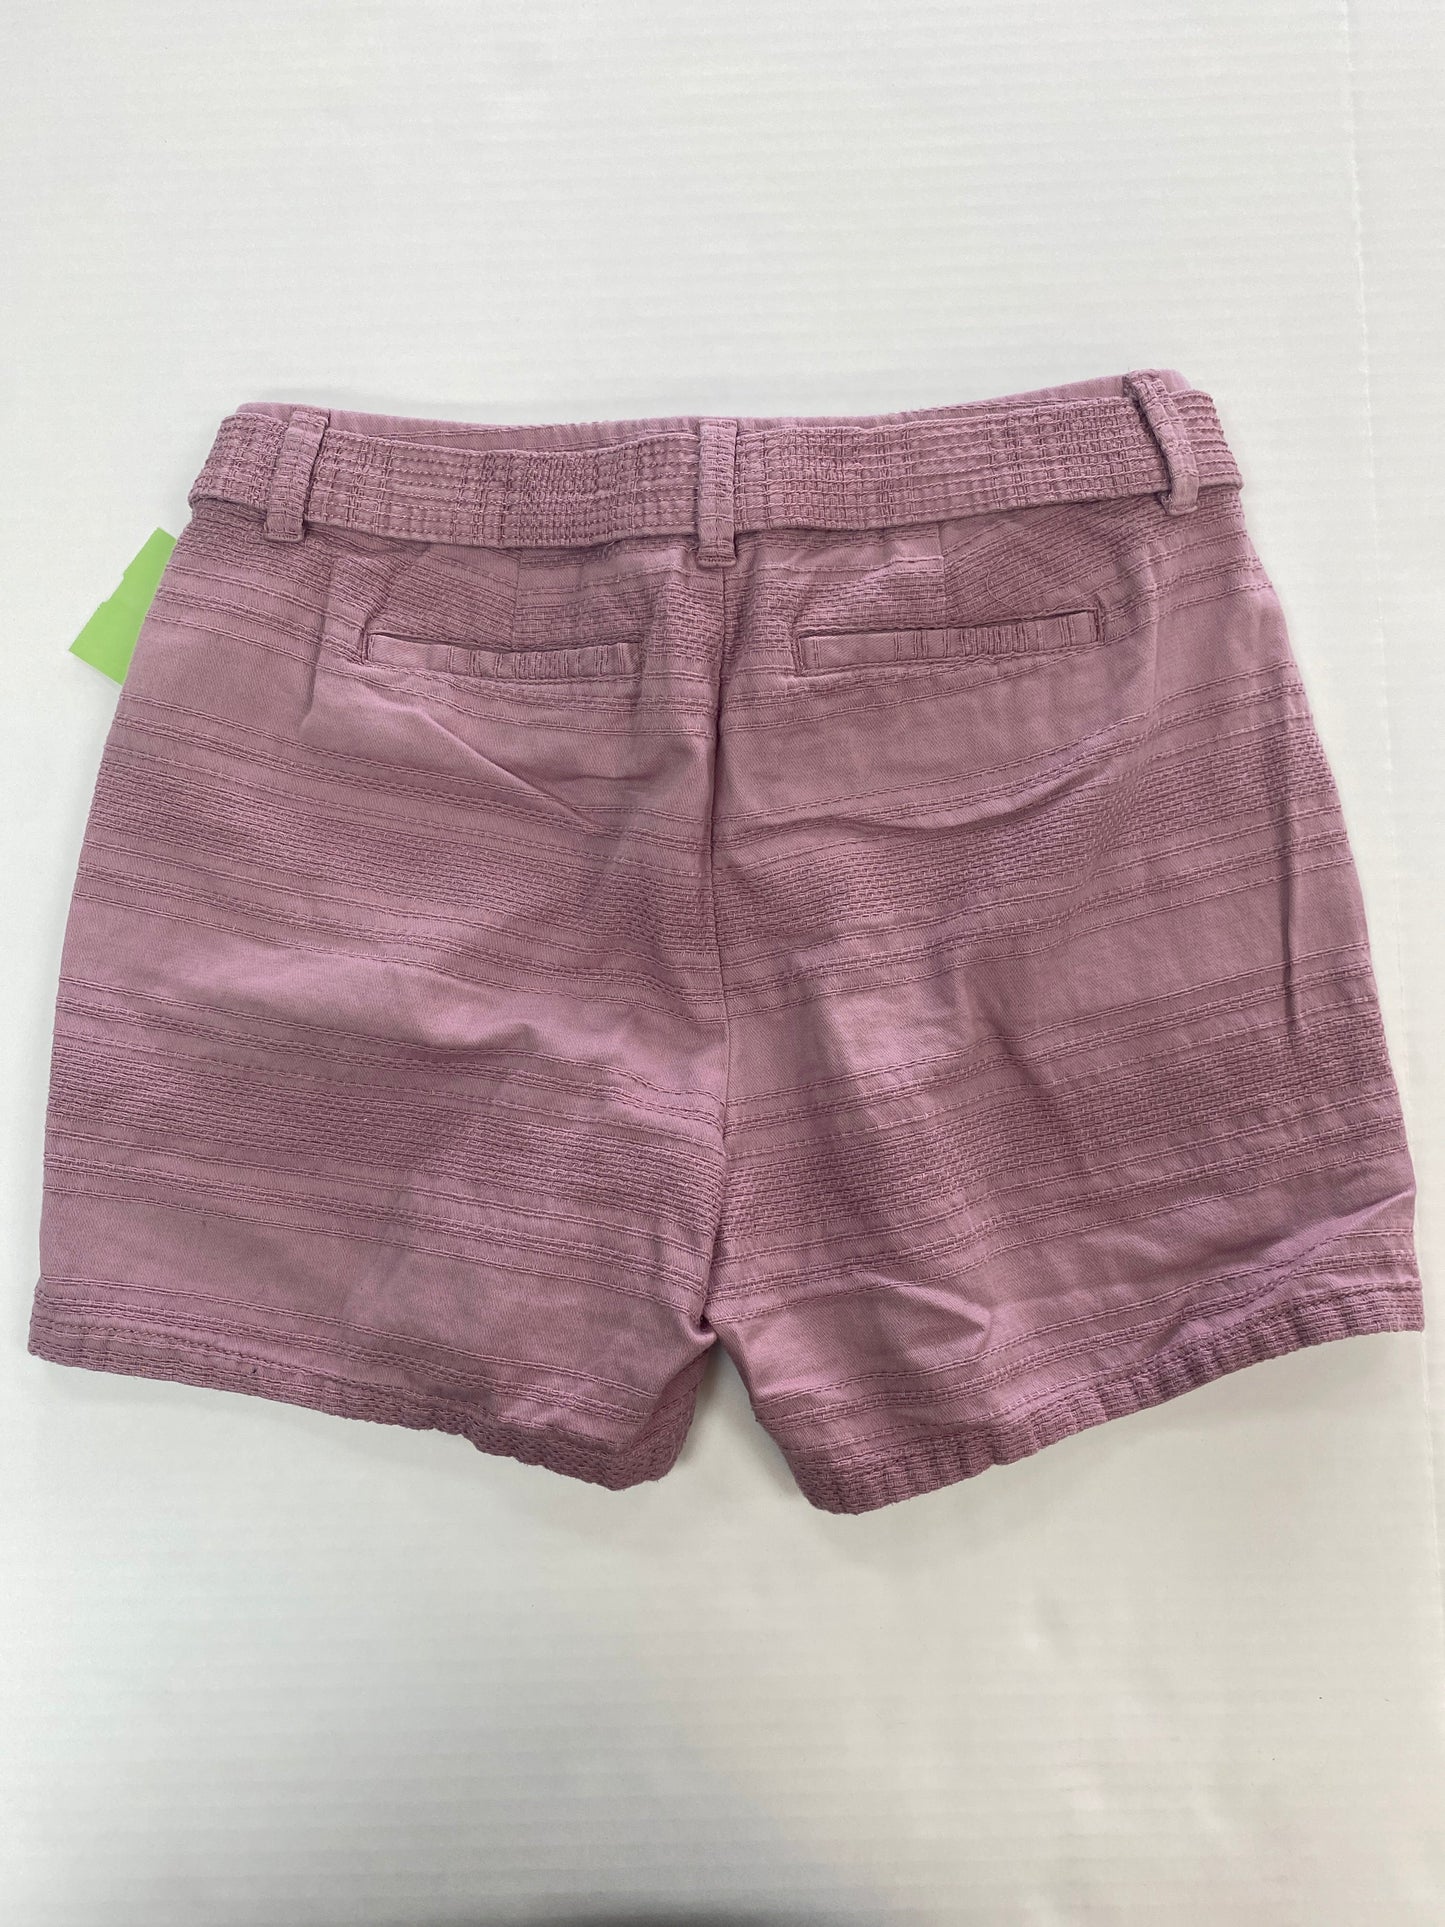 Shorts By Liz Claiborne  Size: 4